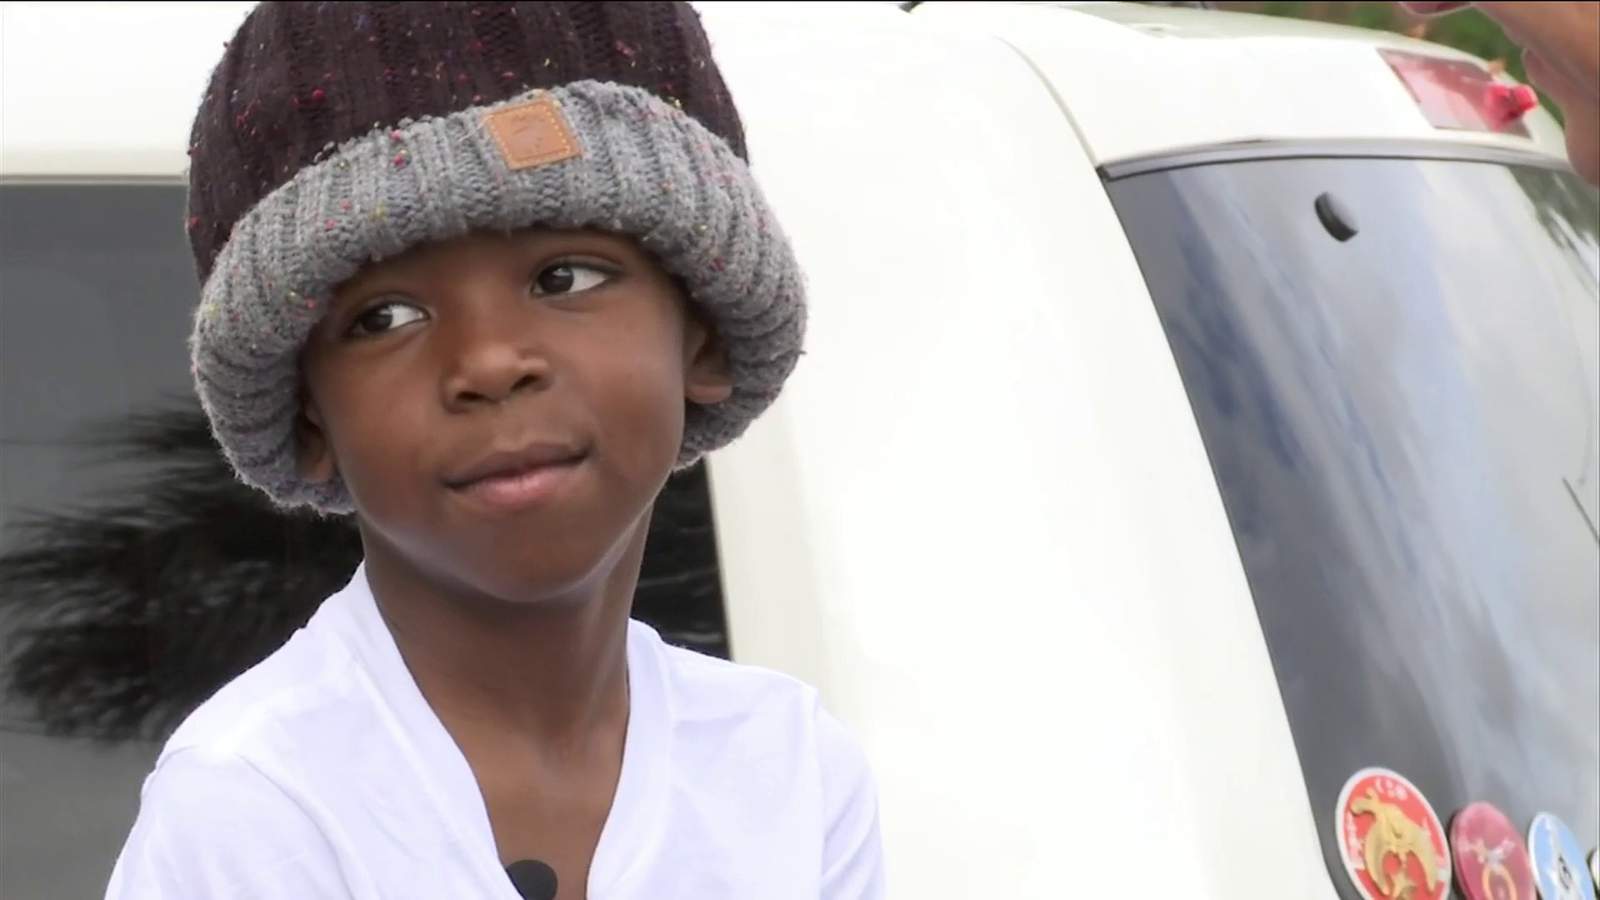 Jacksonville boy, 7, describes being shot: ‘It felt like fire’